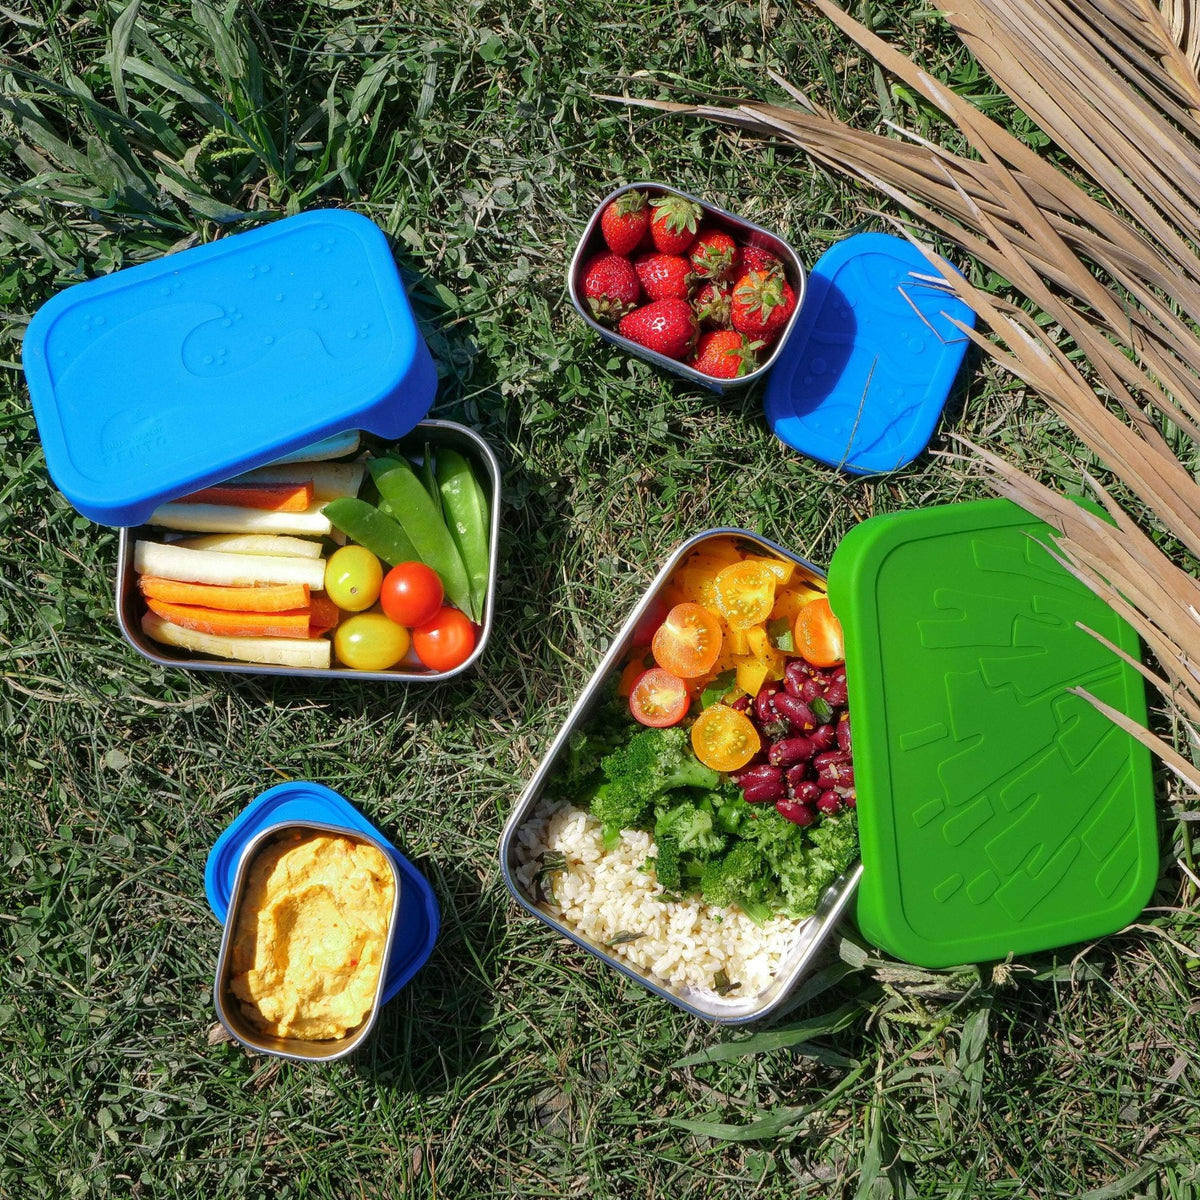 4 Modular Food Storage Containers (Splash Box Quad Set)